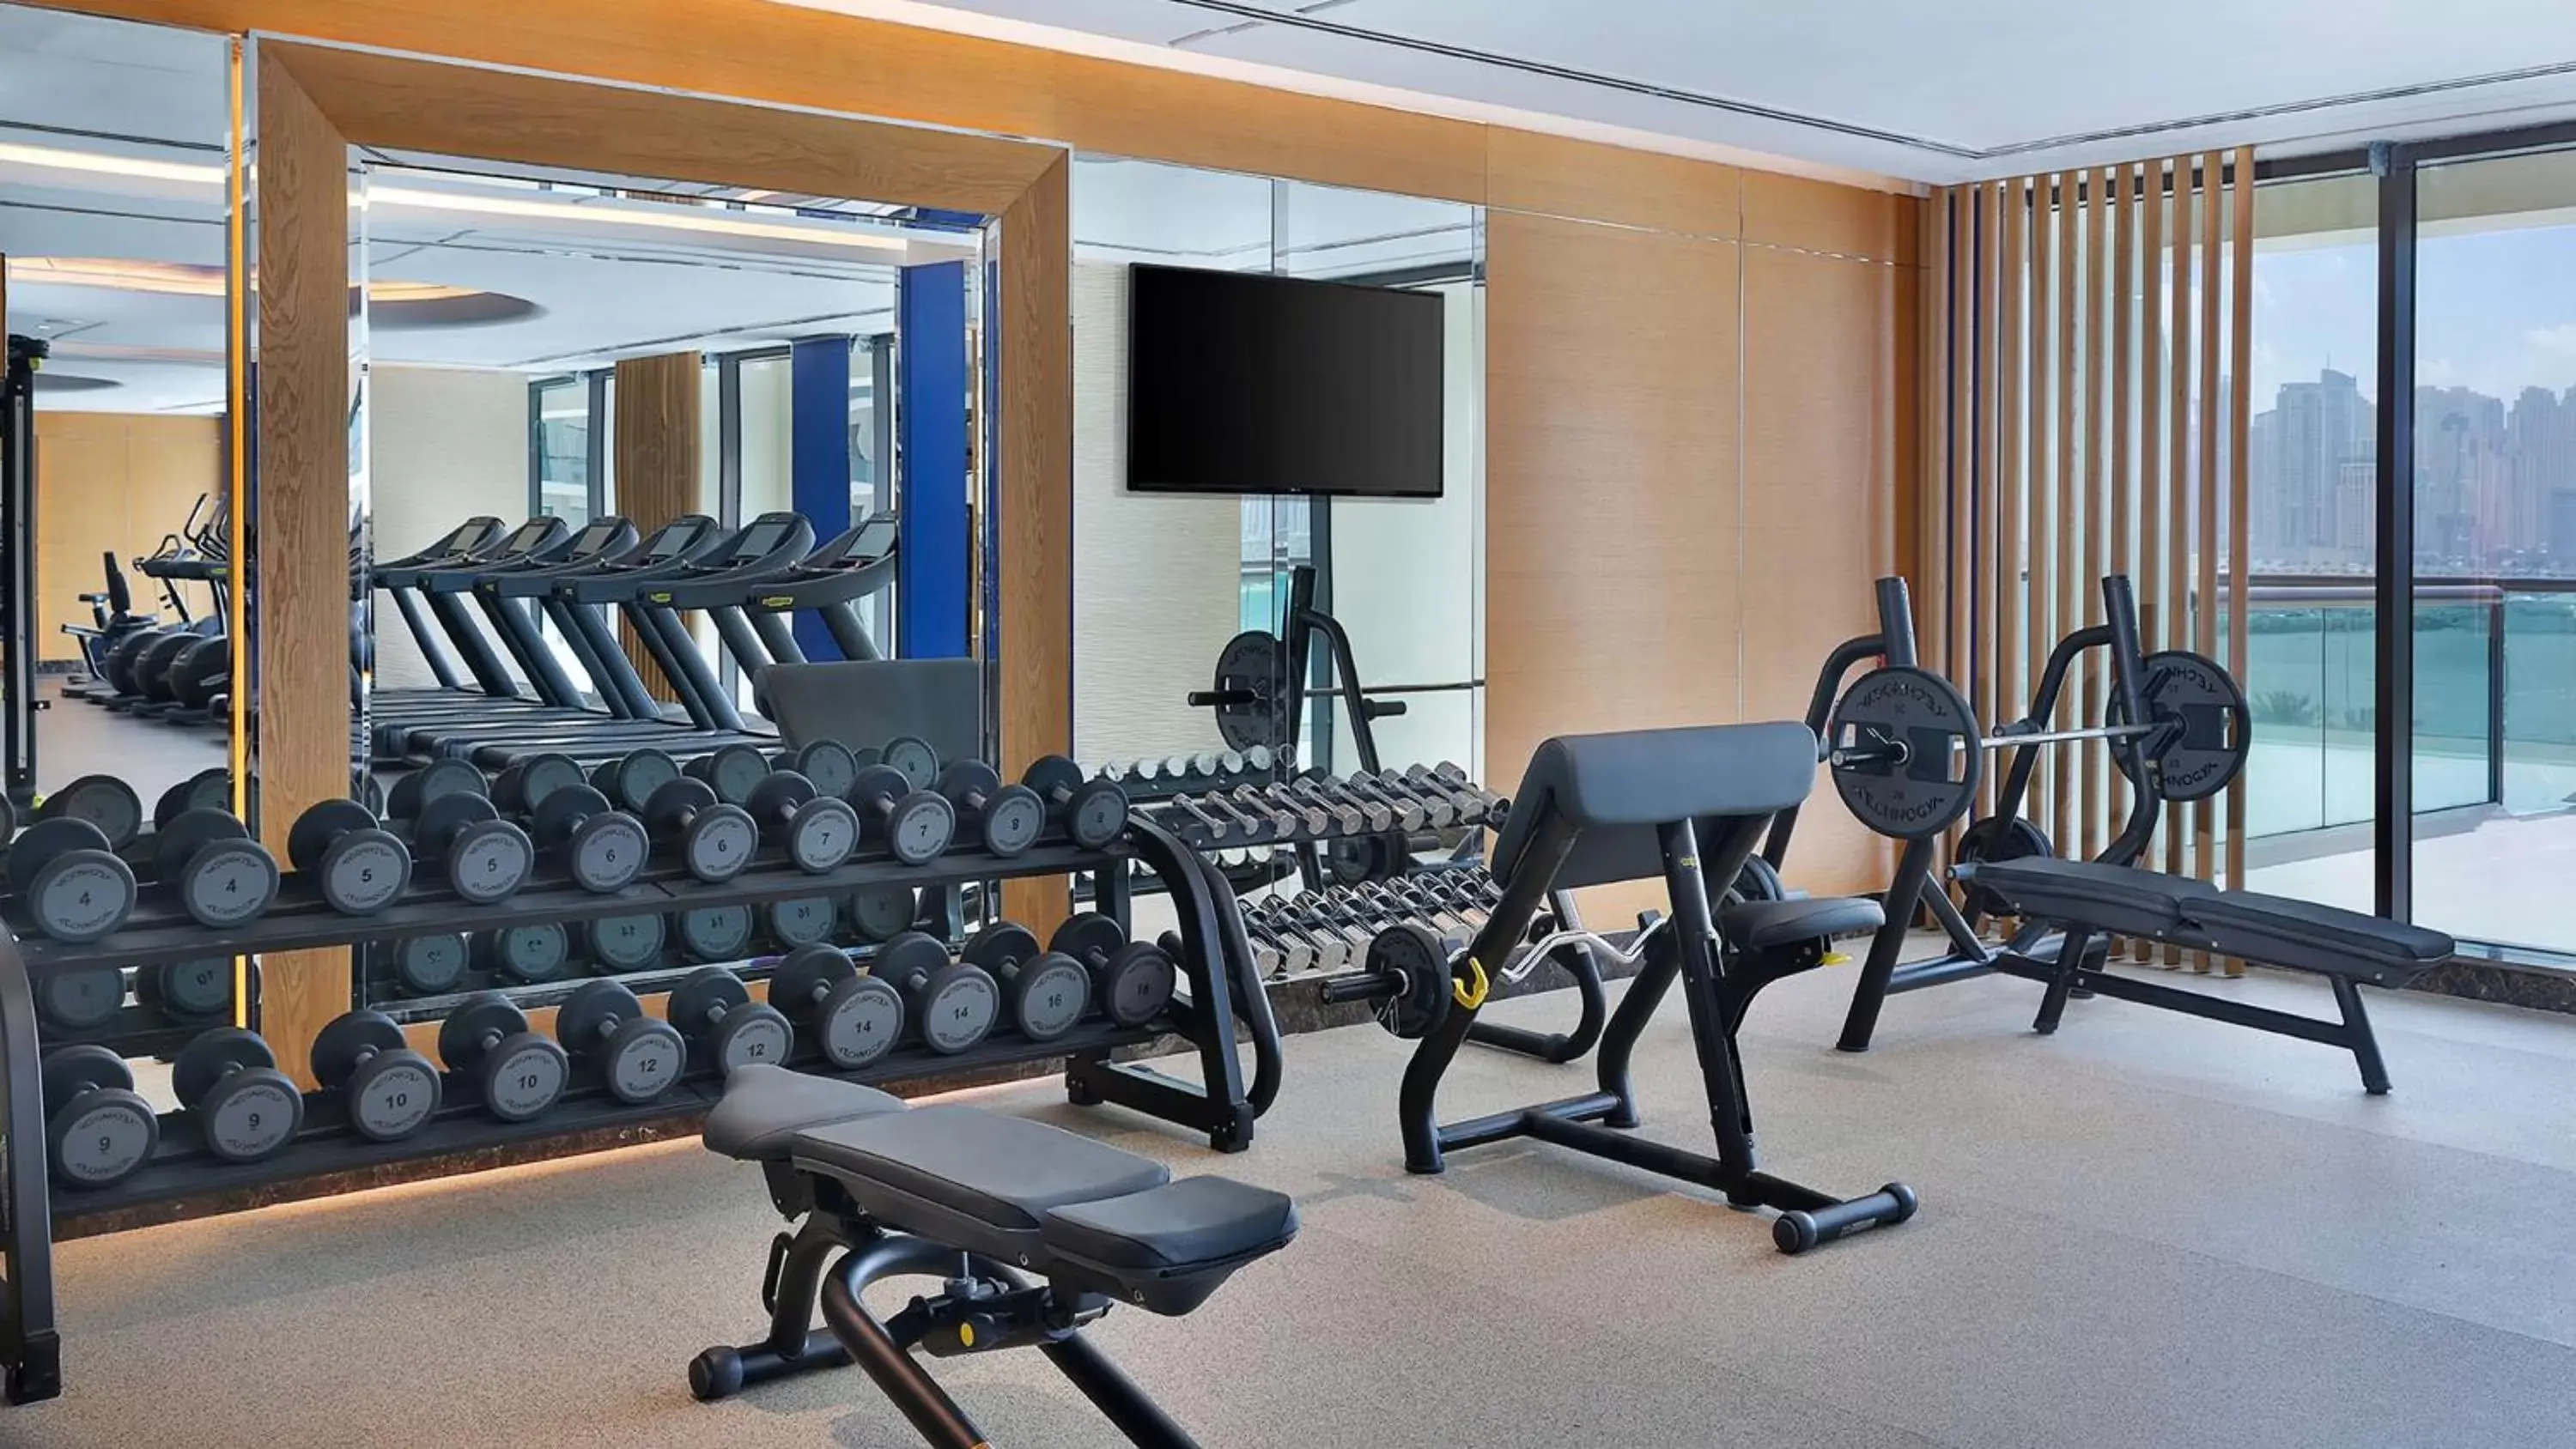 Fitness centre/facilities, Fitness Center/Facilities in Hilton Dubai Palm Jumeirah